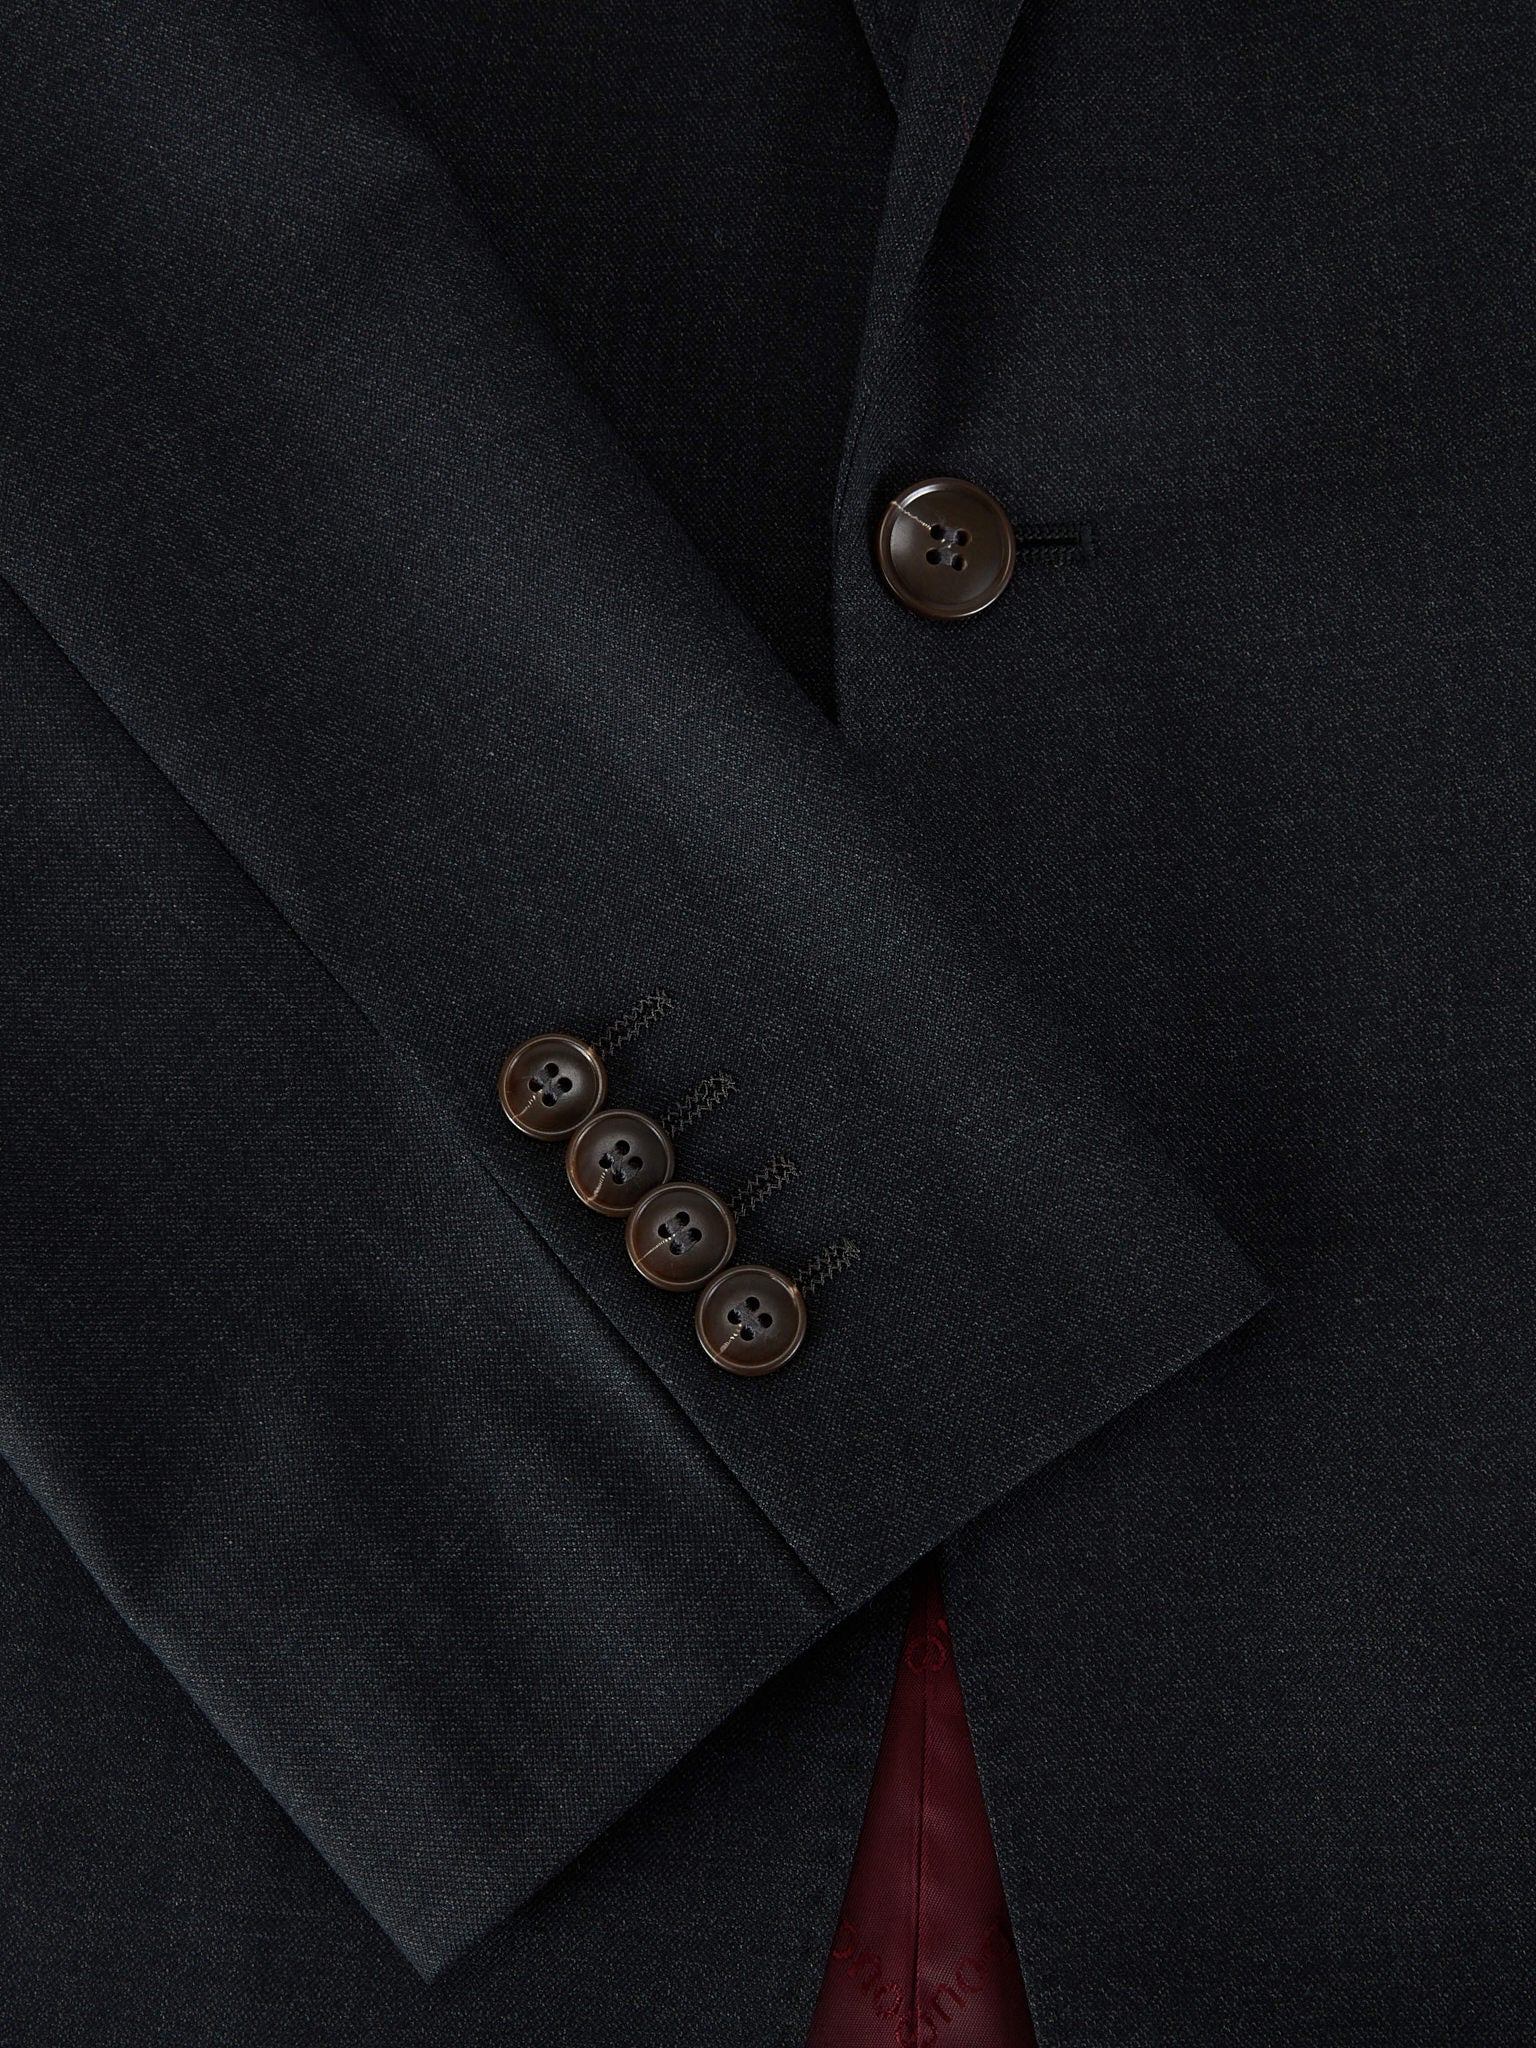 Douglas Valdino Charcoal Mix & Match Suit Jacket Short Length